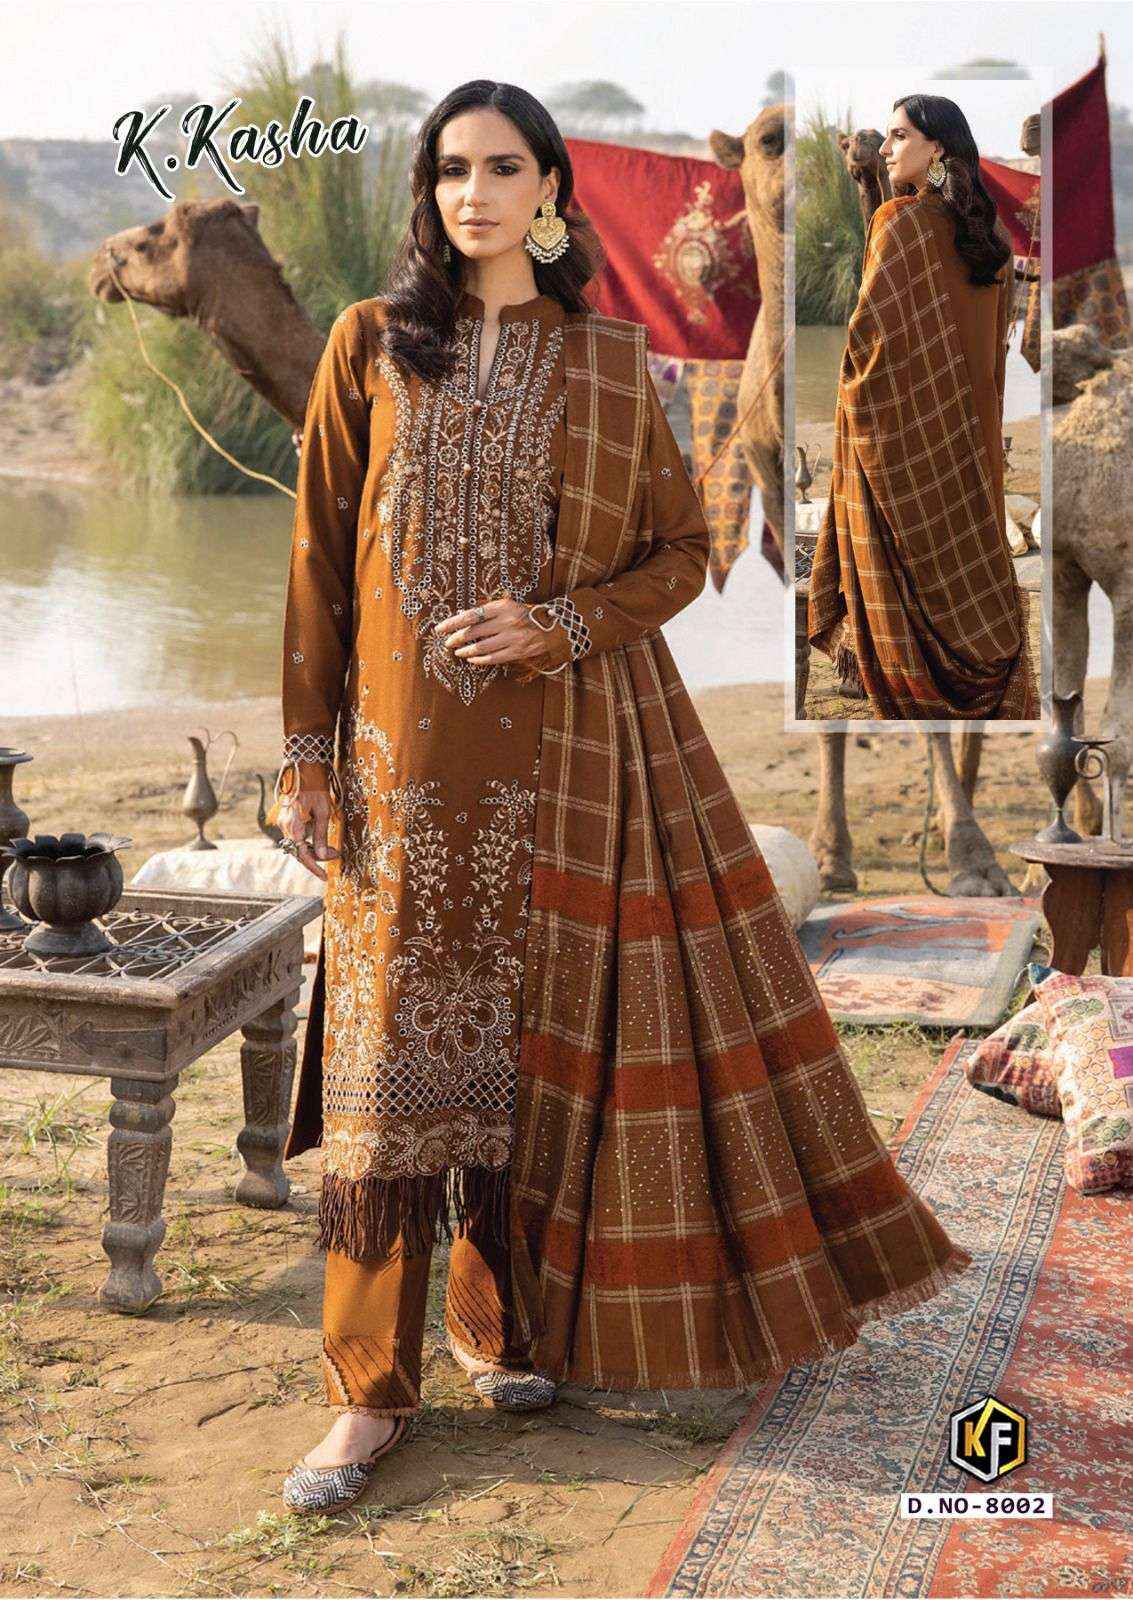 Keval Fab K Kasha Vol 8 Cotton Dress Material 6 pcs Catalogue